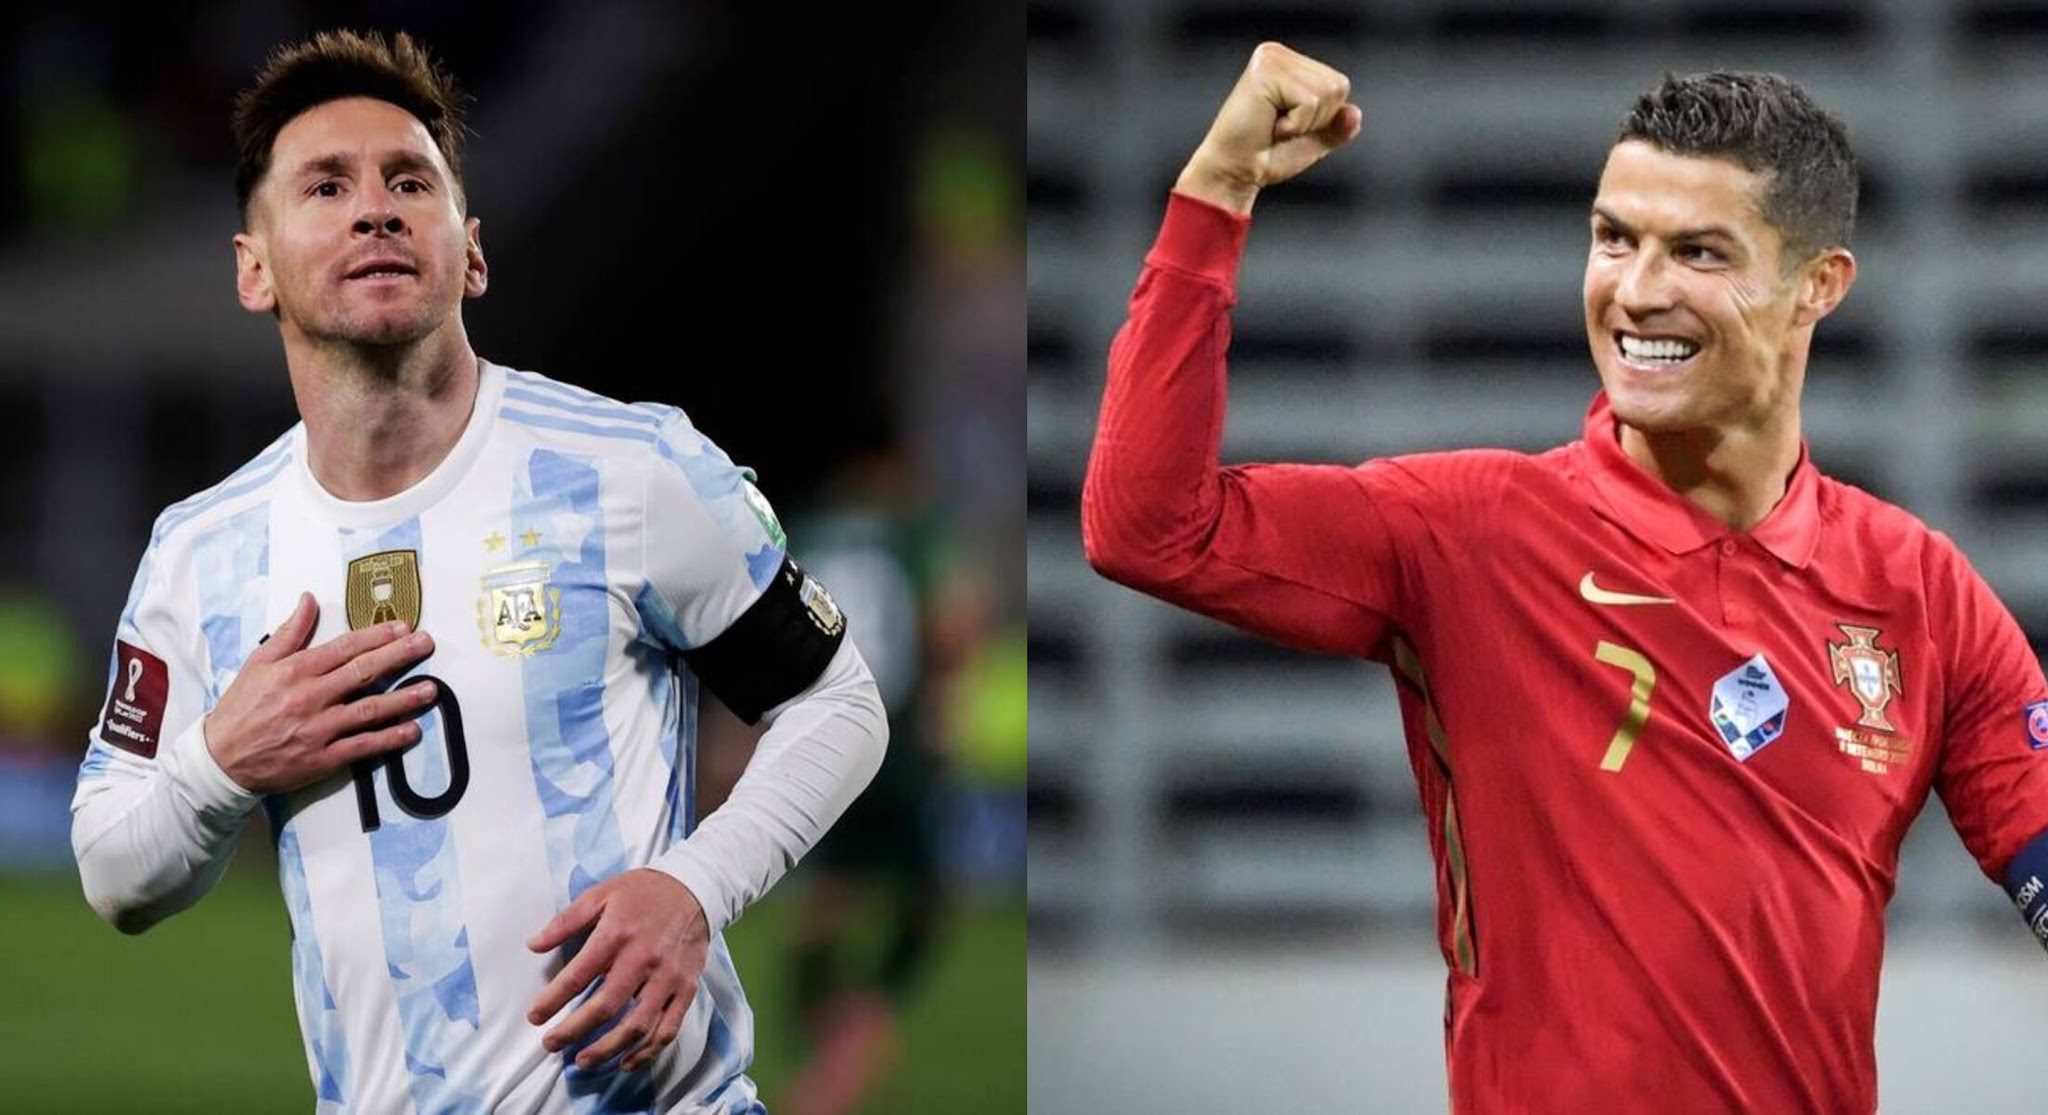 Ronaldo vs Messi: Ageless Messi scores 5 goals, Ronaldo scores brace in 4 minutes, both break records